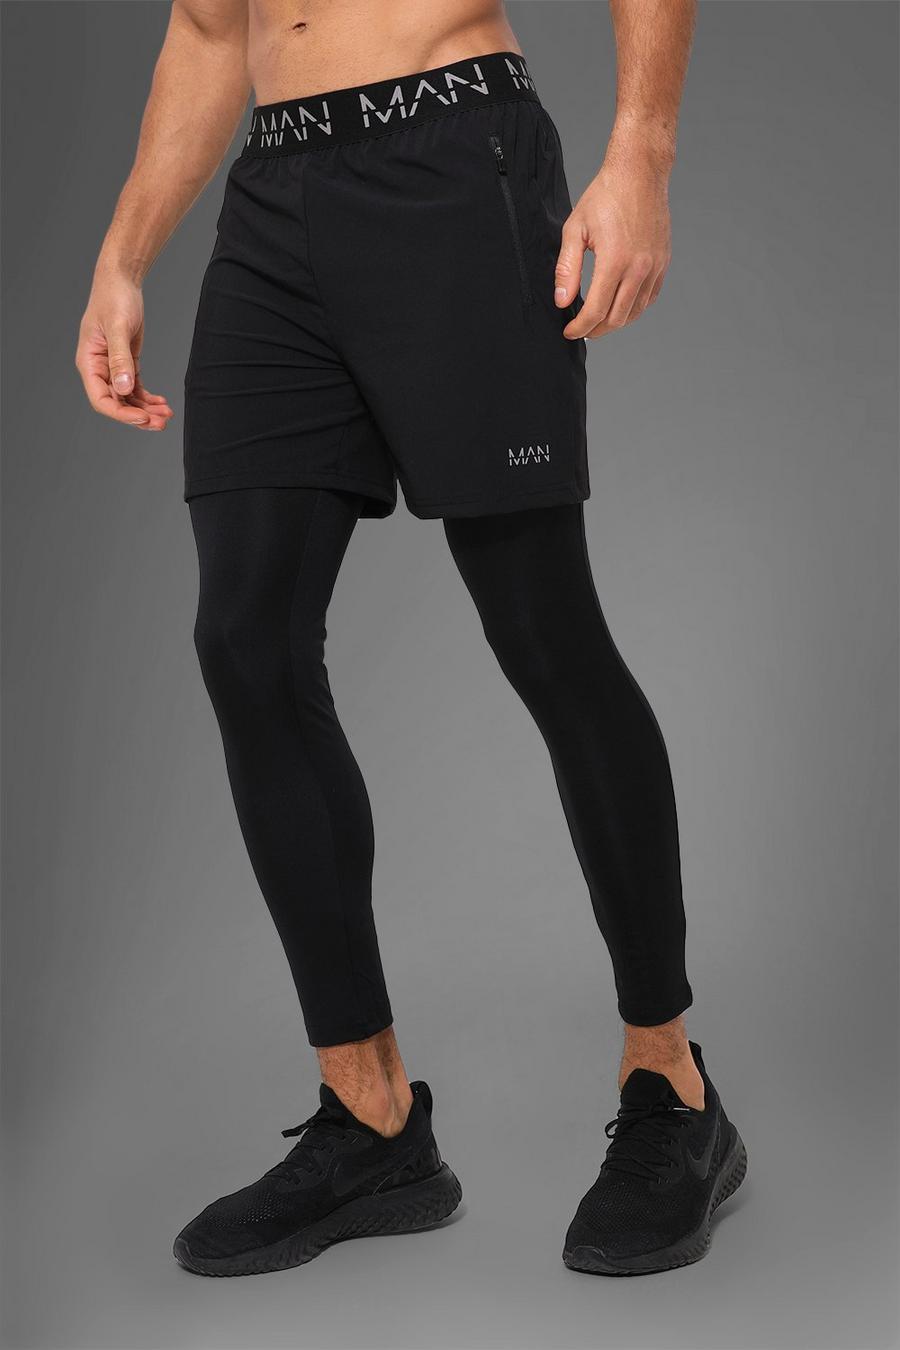 Black noir Man Active Gym 2-In-1 Legging Shorts